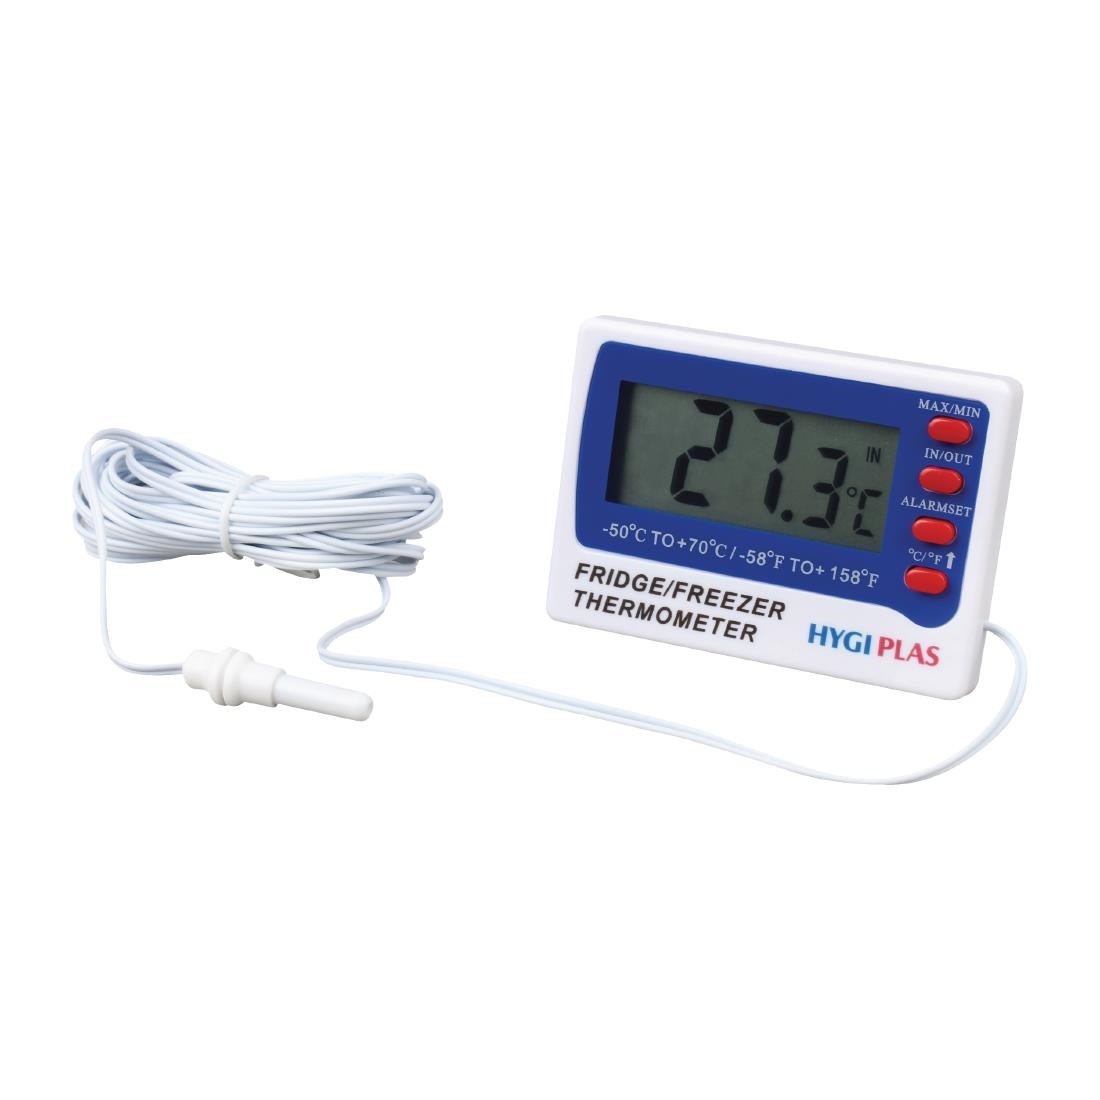 Hygiplas Digital Fridge Freezer Thermometer